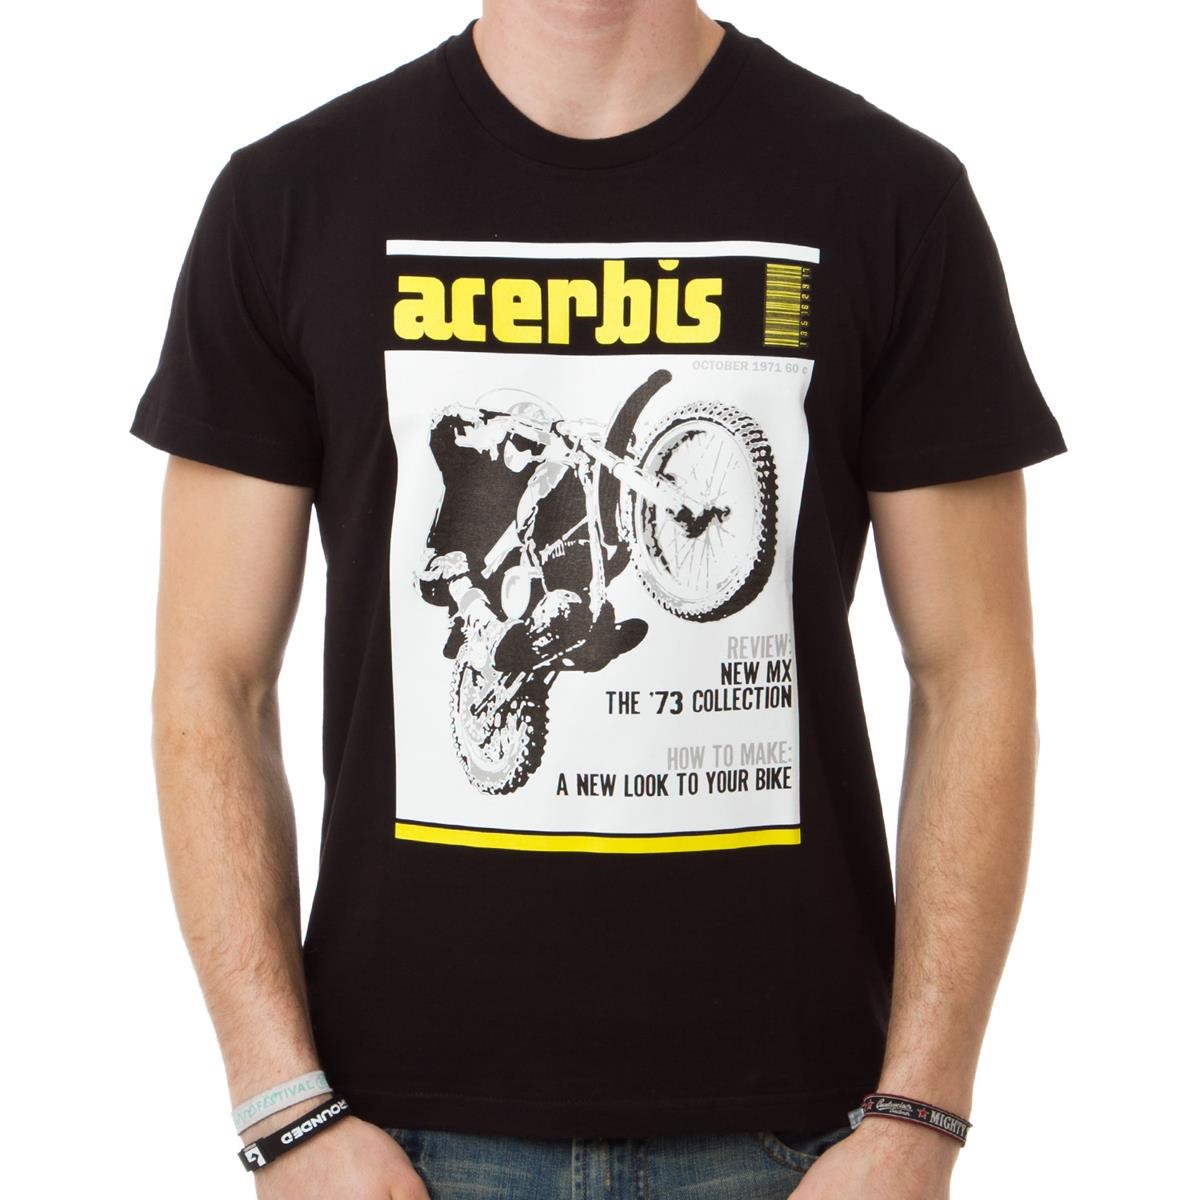 Freizeit/Streetwear Bekleidung-T-Shirts/Polos - Acerbis T-Shirt Review Black